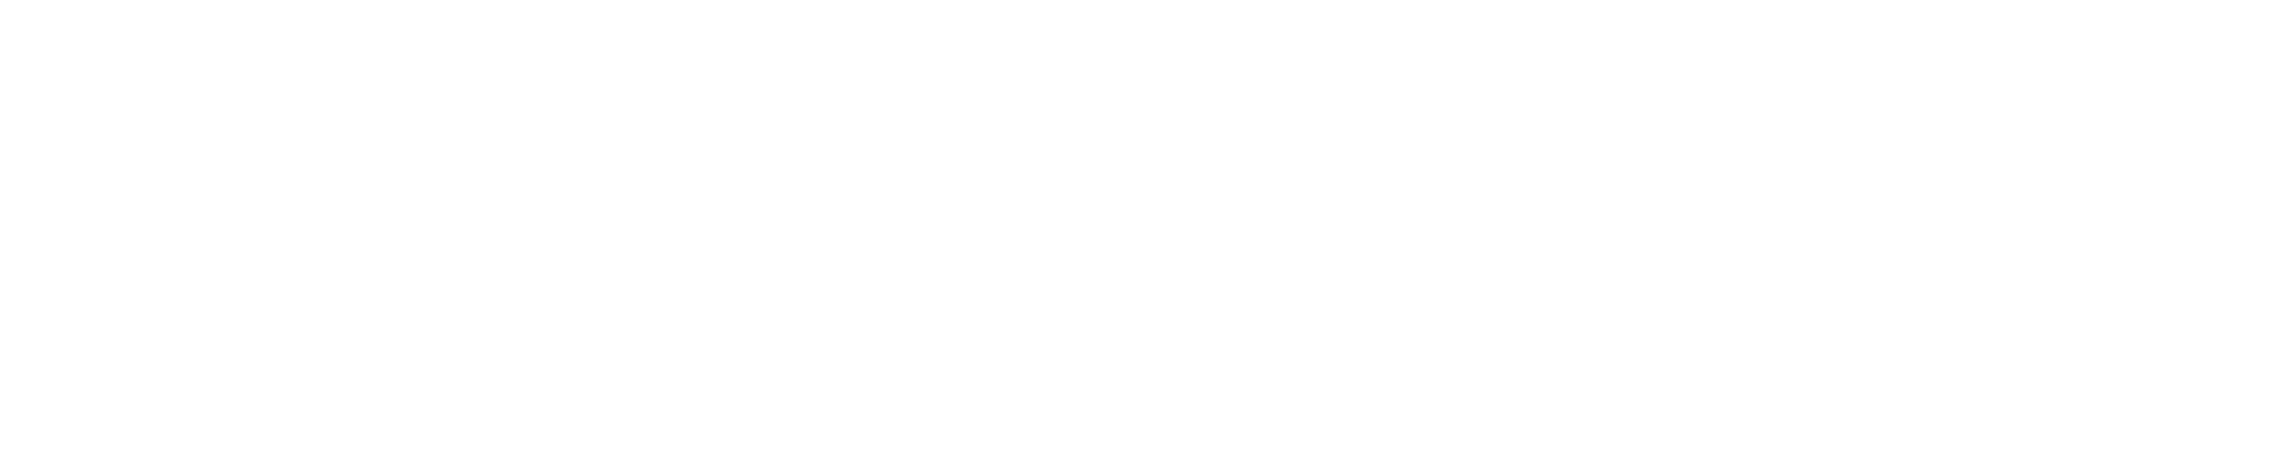 Prime 1